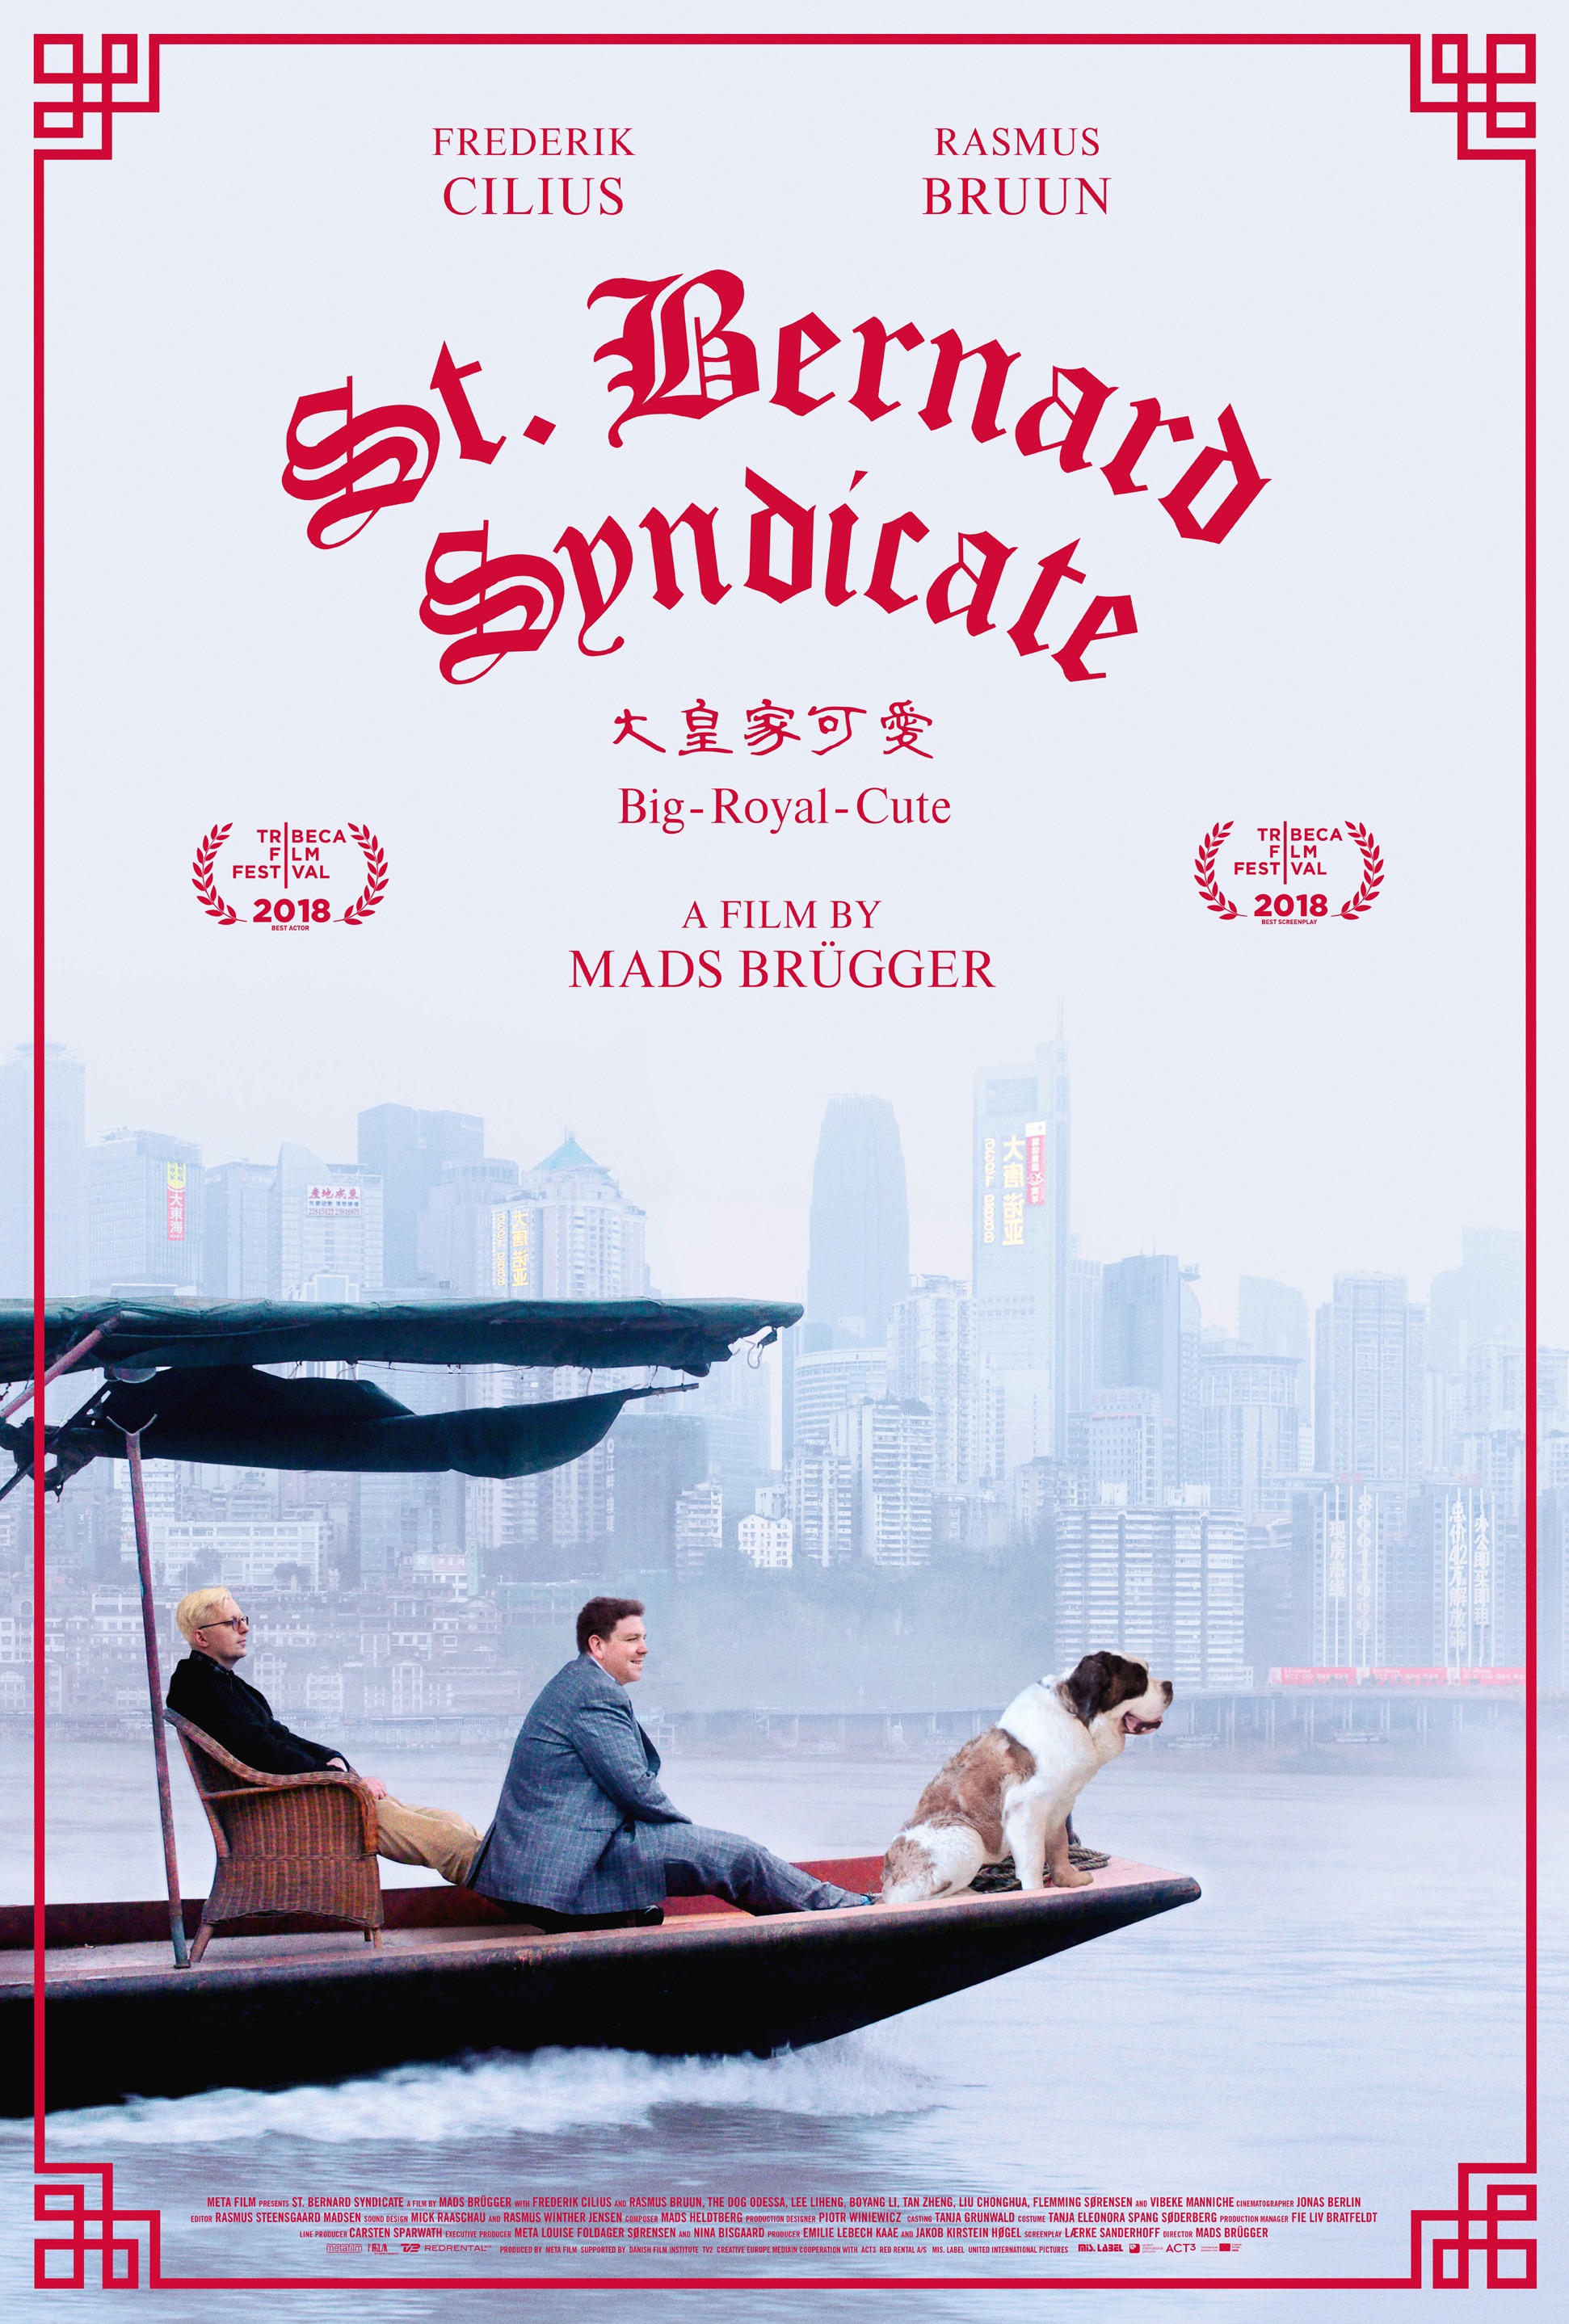 Mega Sized Movie Poster Image for St. Bernard Syndicate 